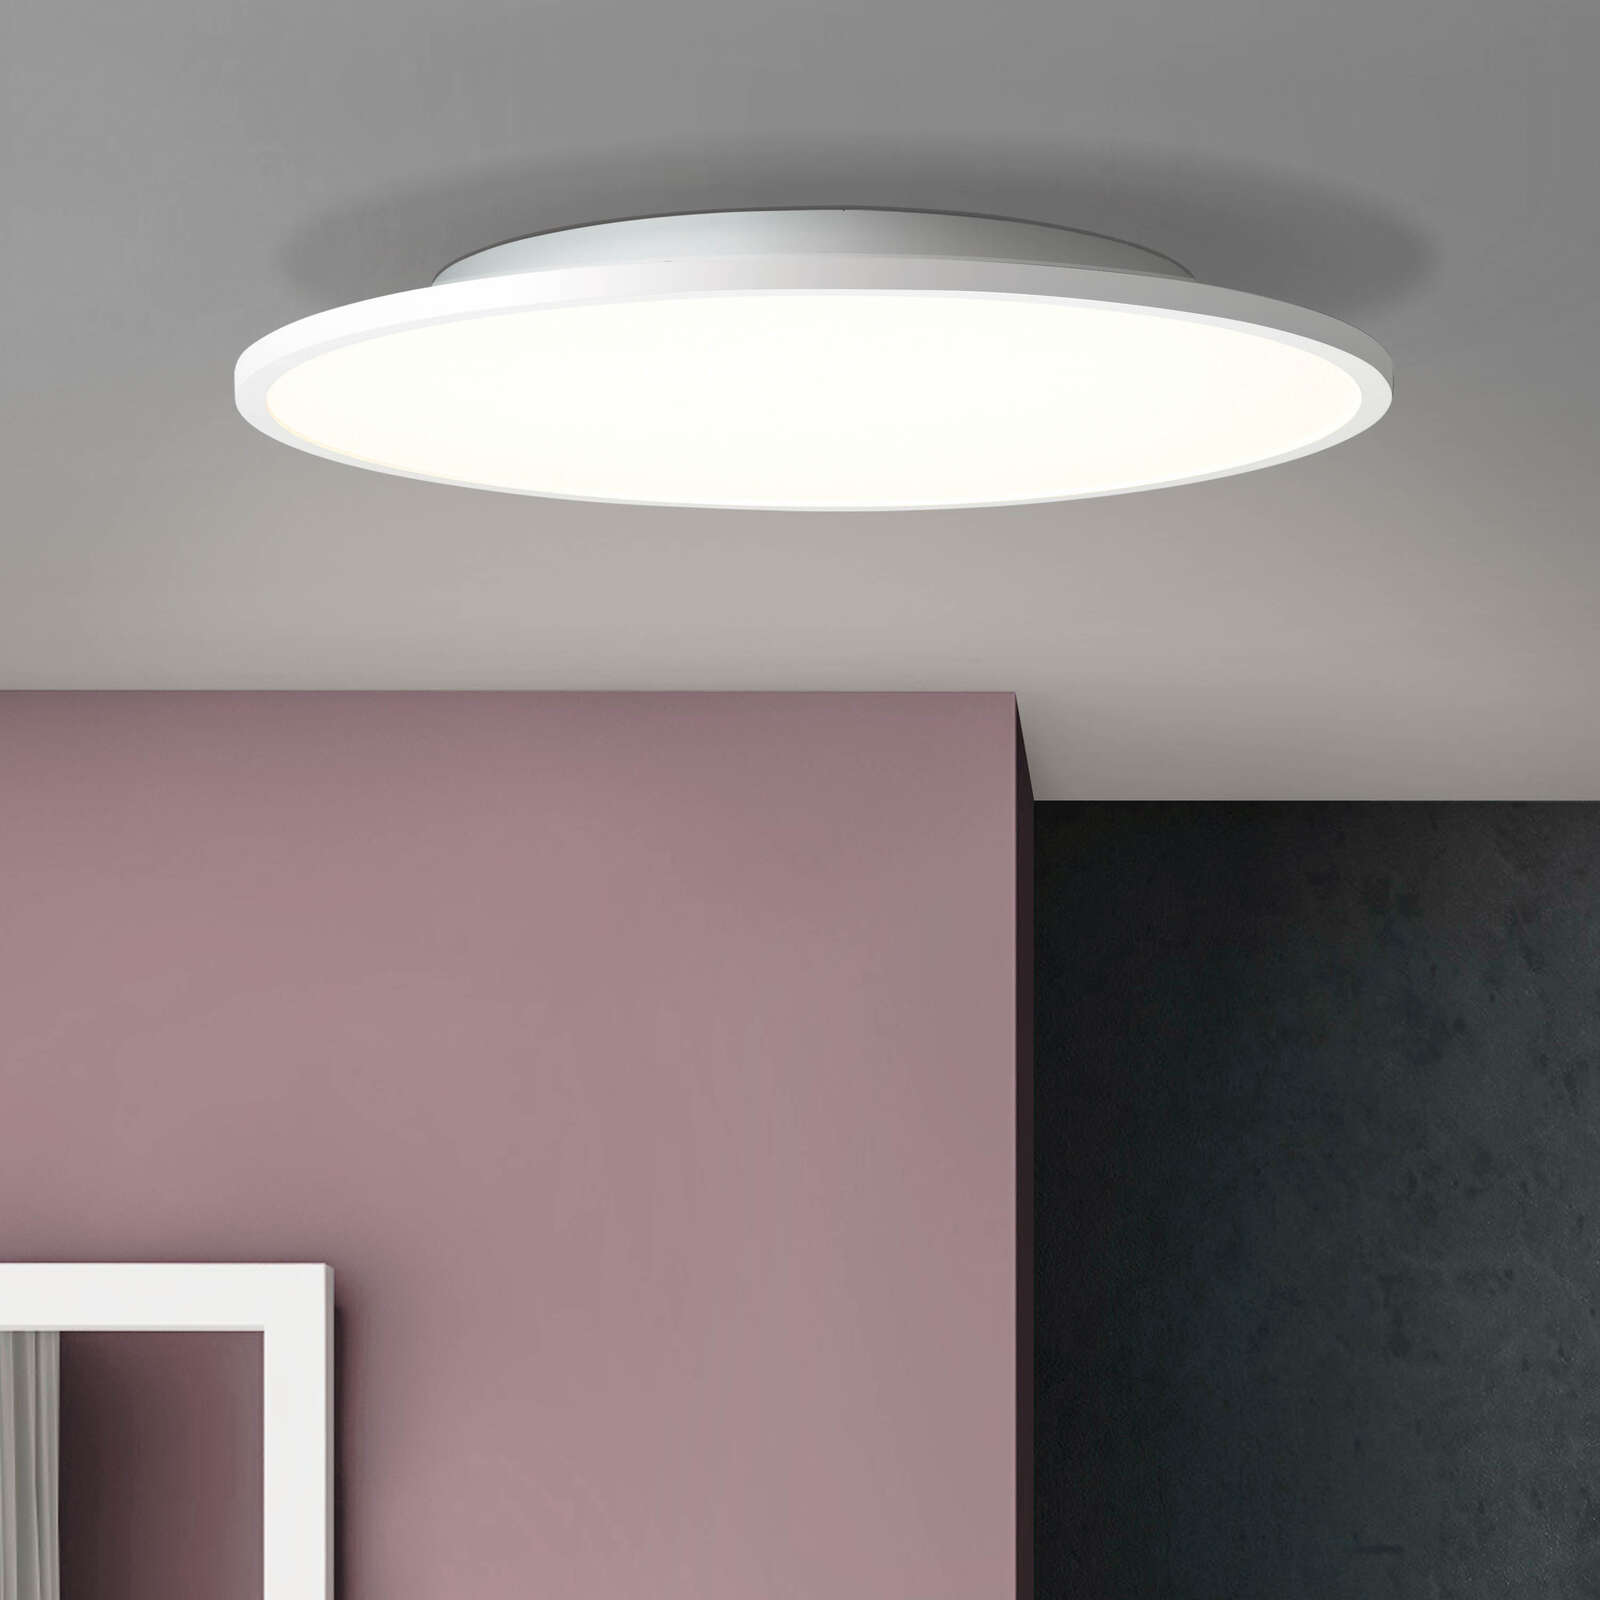             Plastic ceiling light - Constantin 7 - White
        